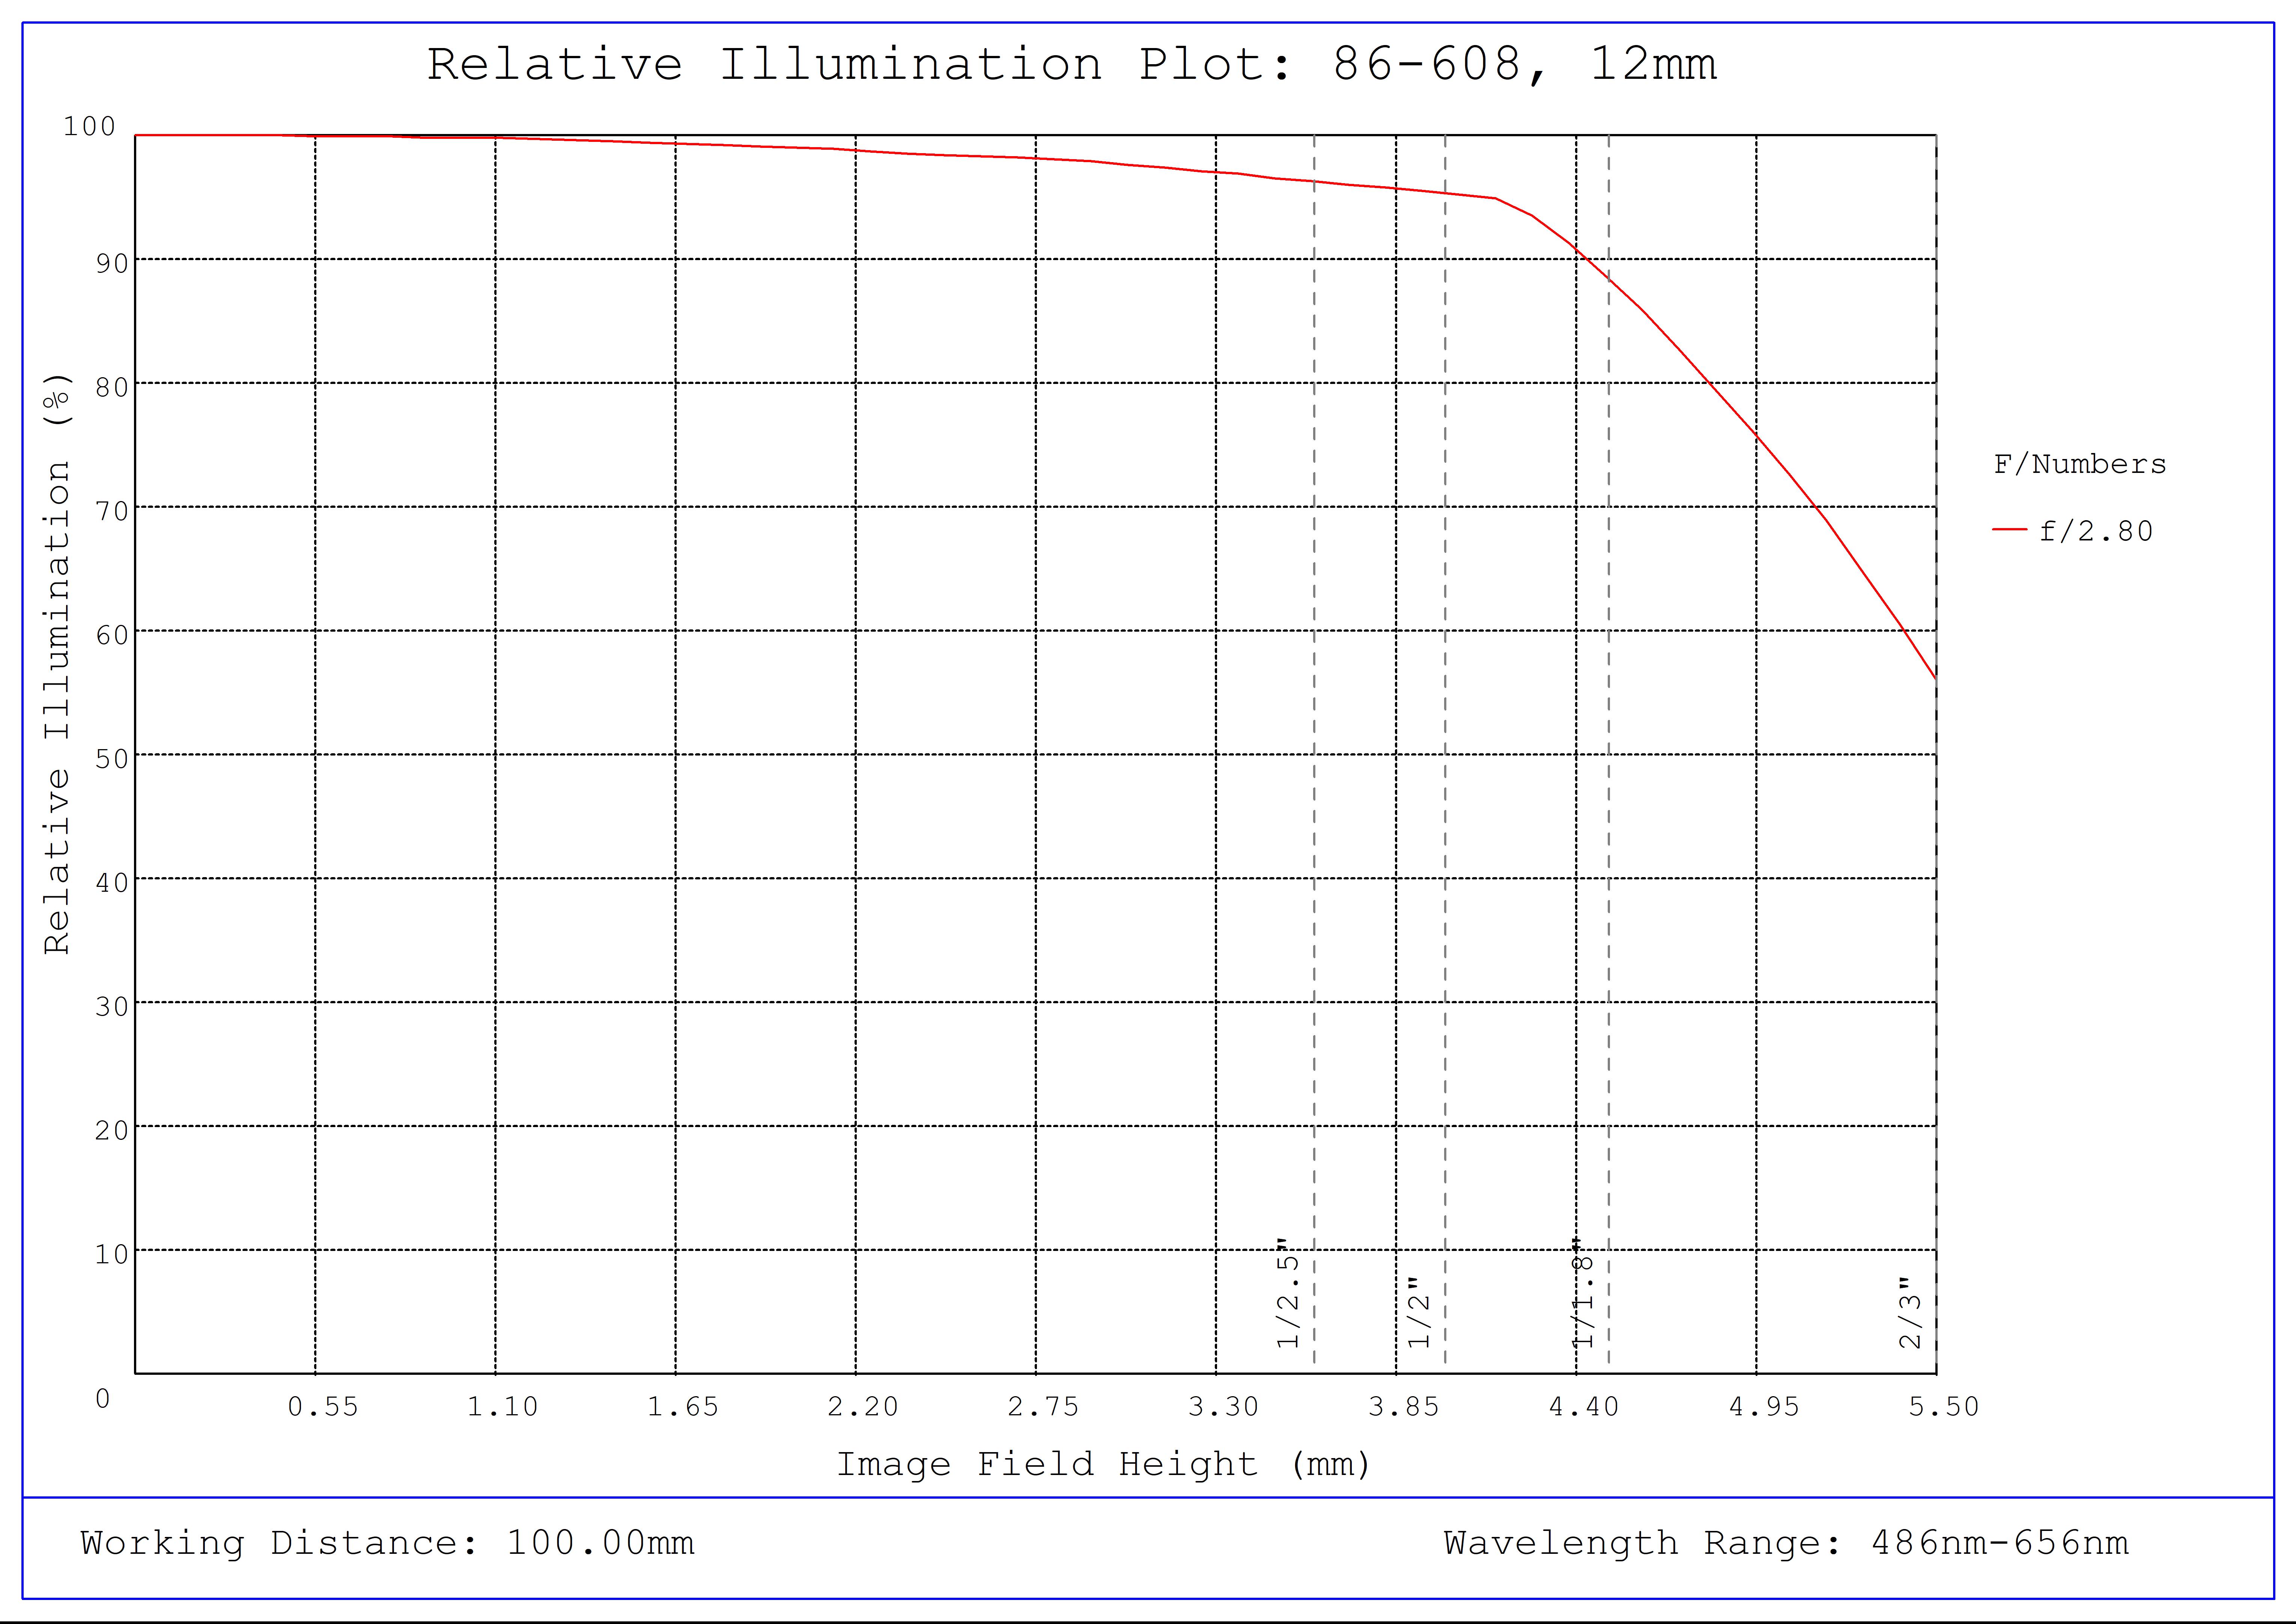 #86-608, 12mm, f/2.8 Ci Series Fixed Focal Length Lens, Relative Illumination Plot